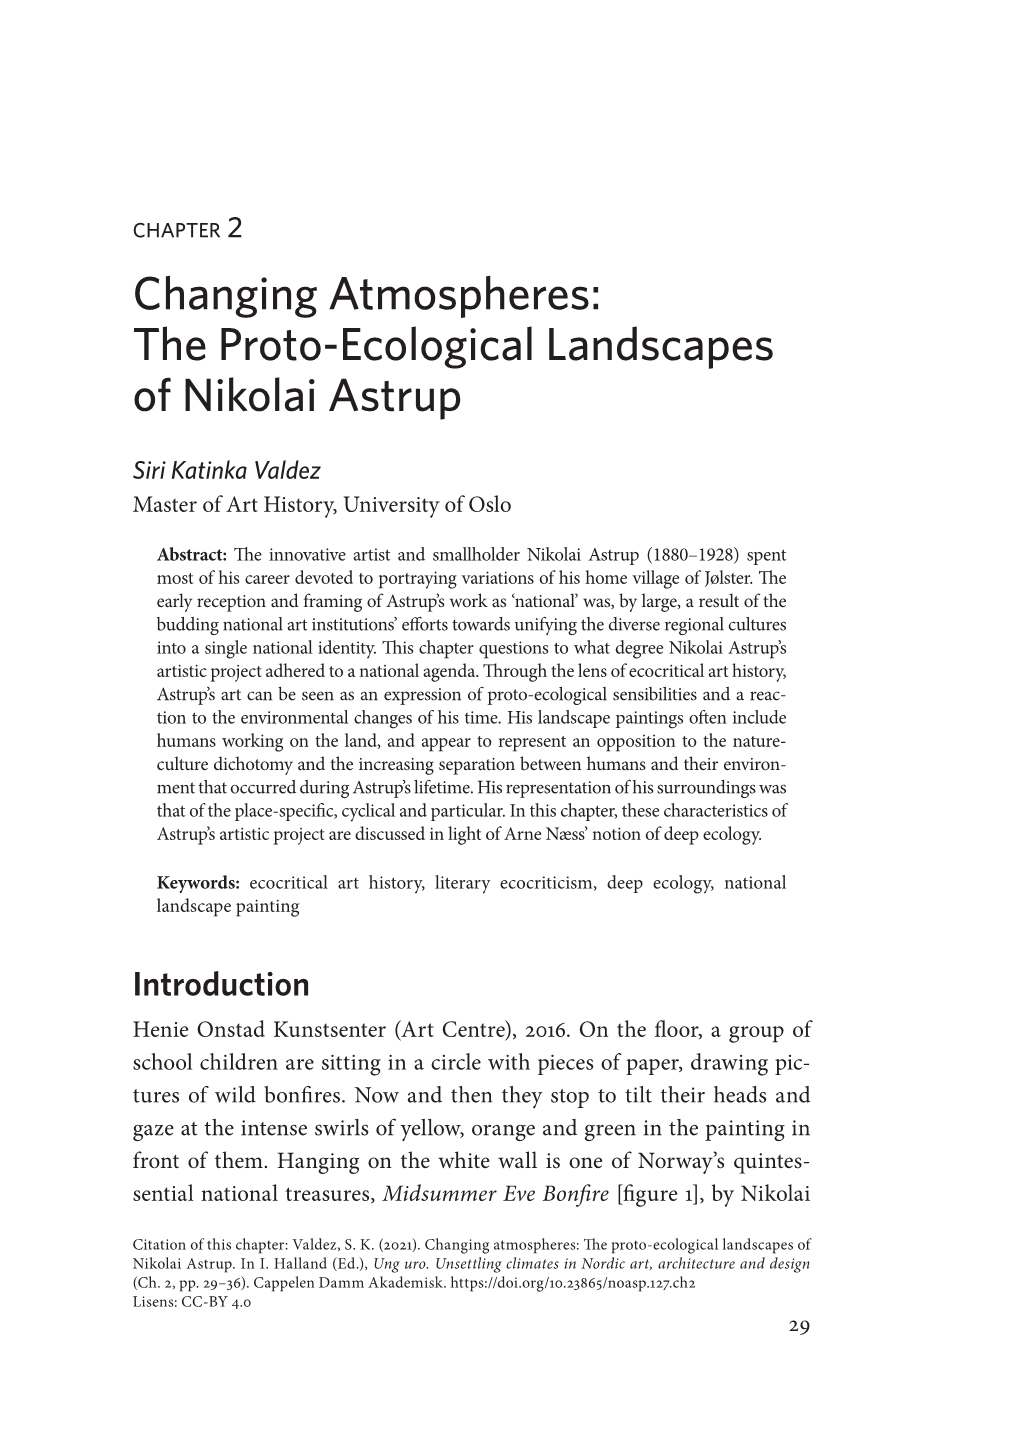 The Proto-Ecological Landscapes of Nikolai Astrup